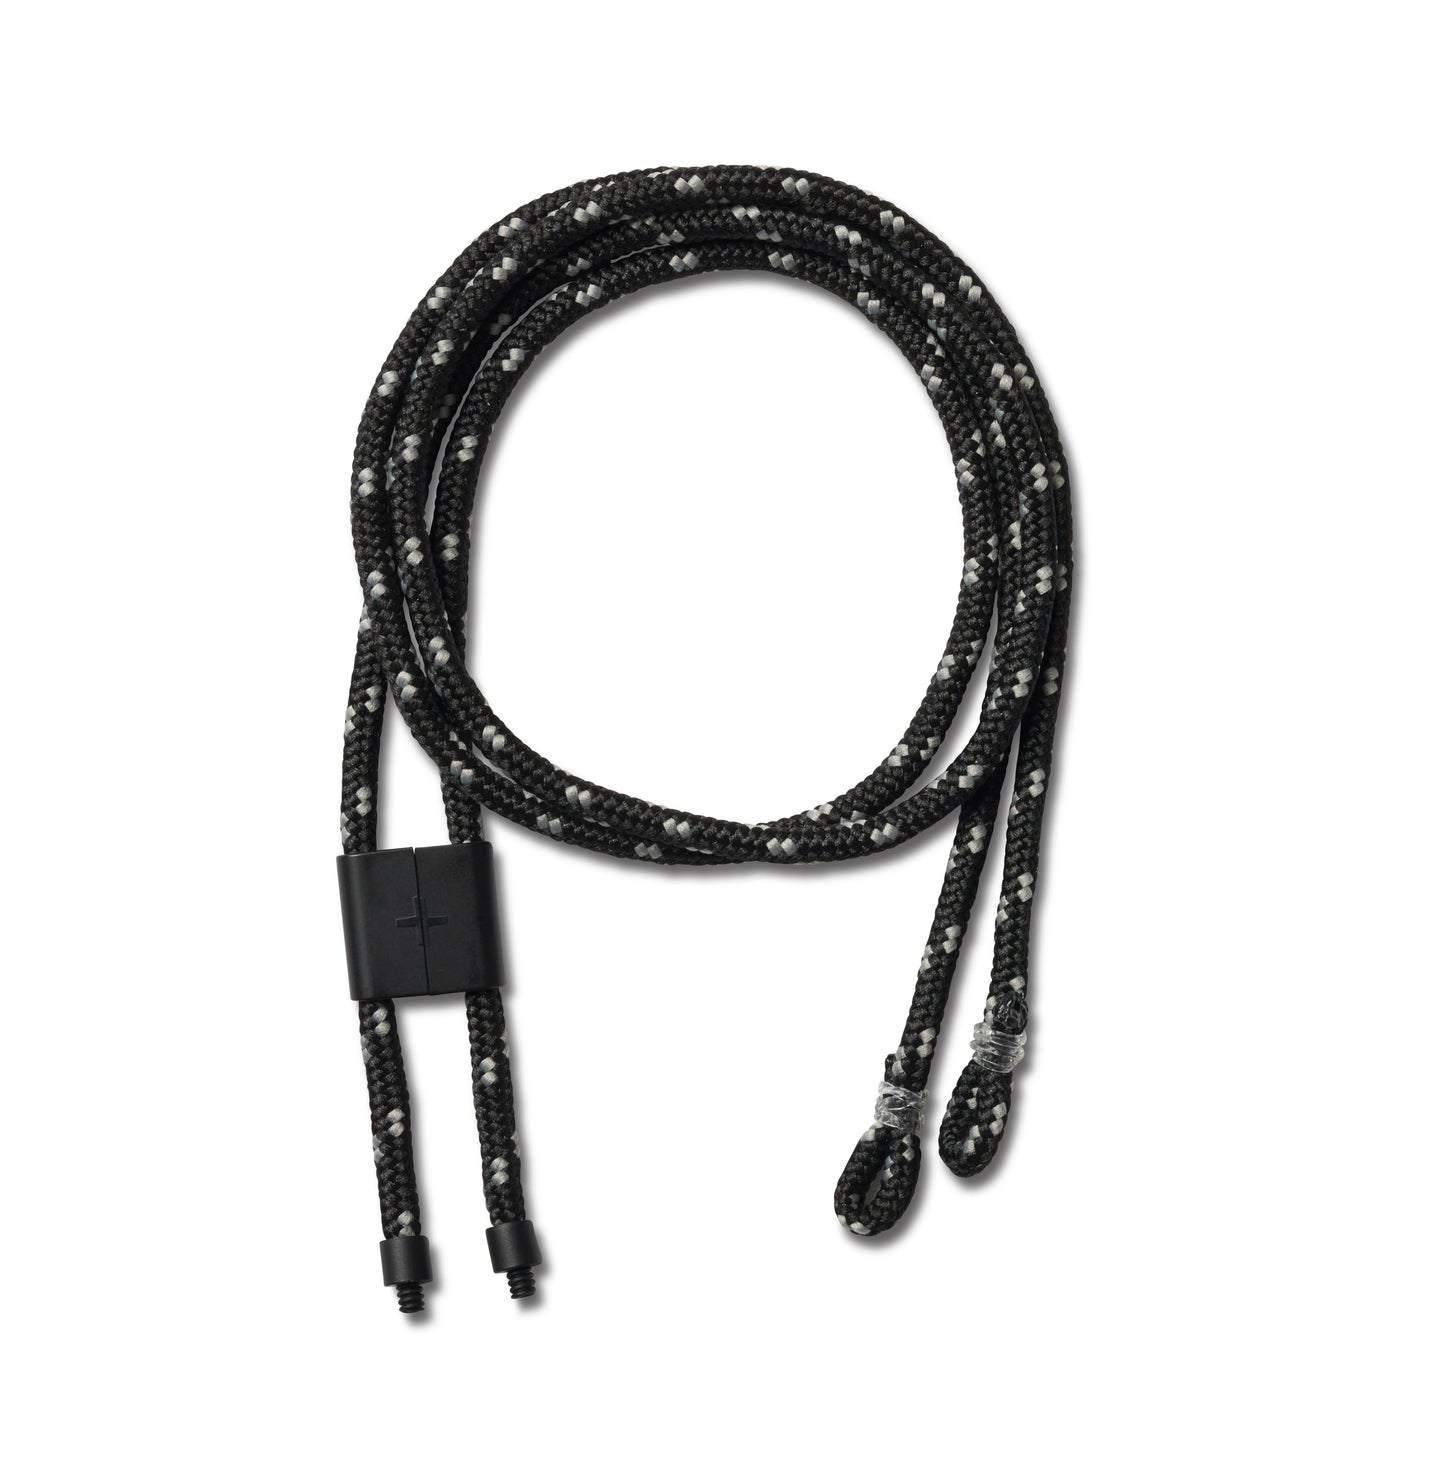 [wear] sunglass leash - black + grey